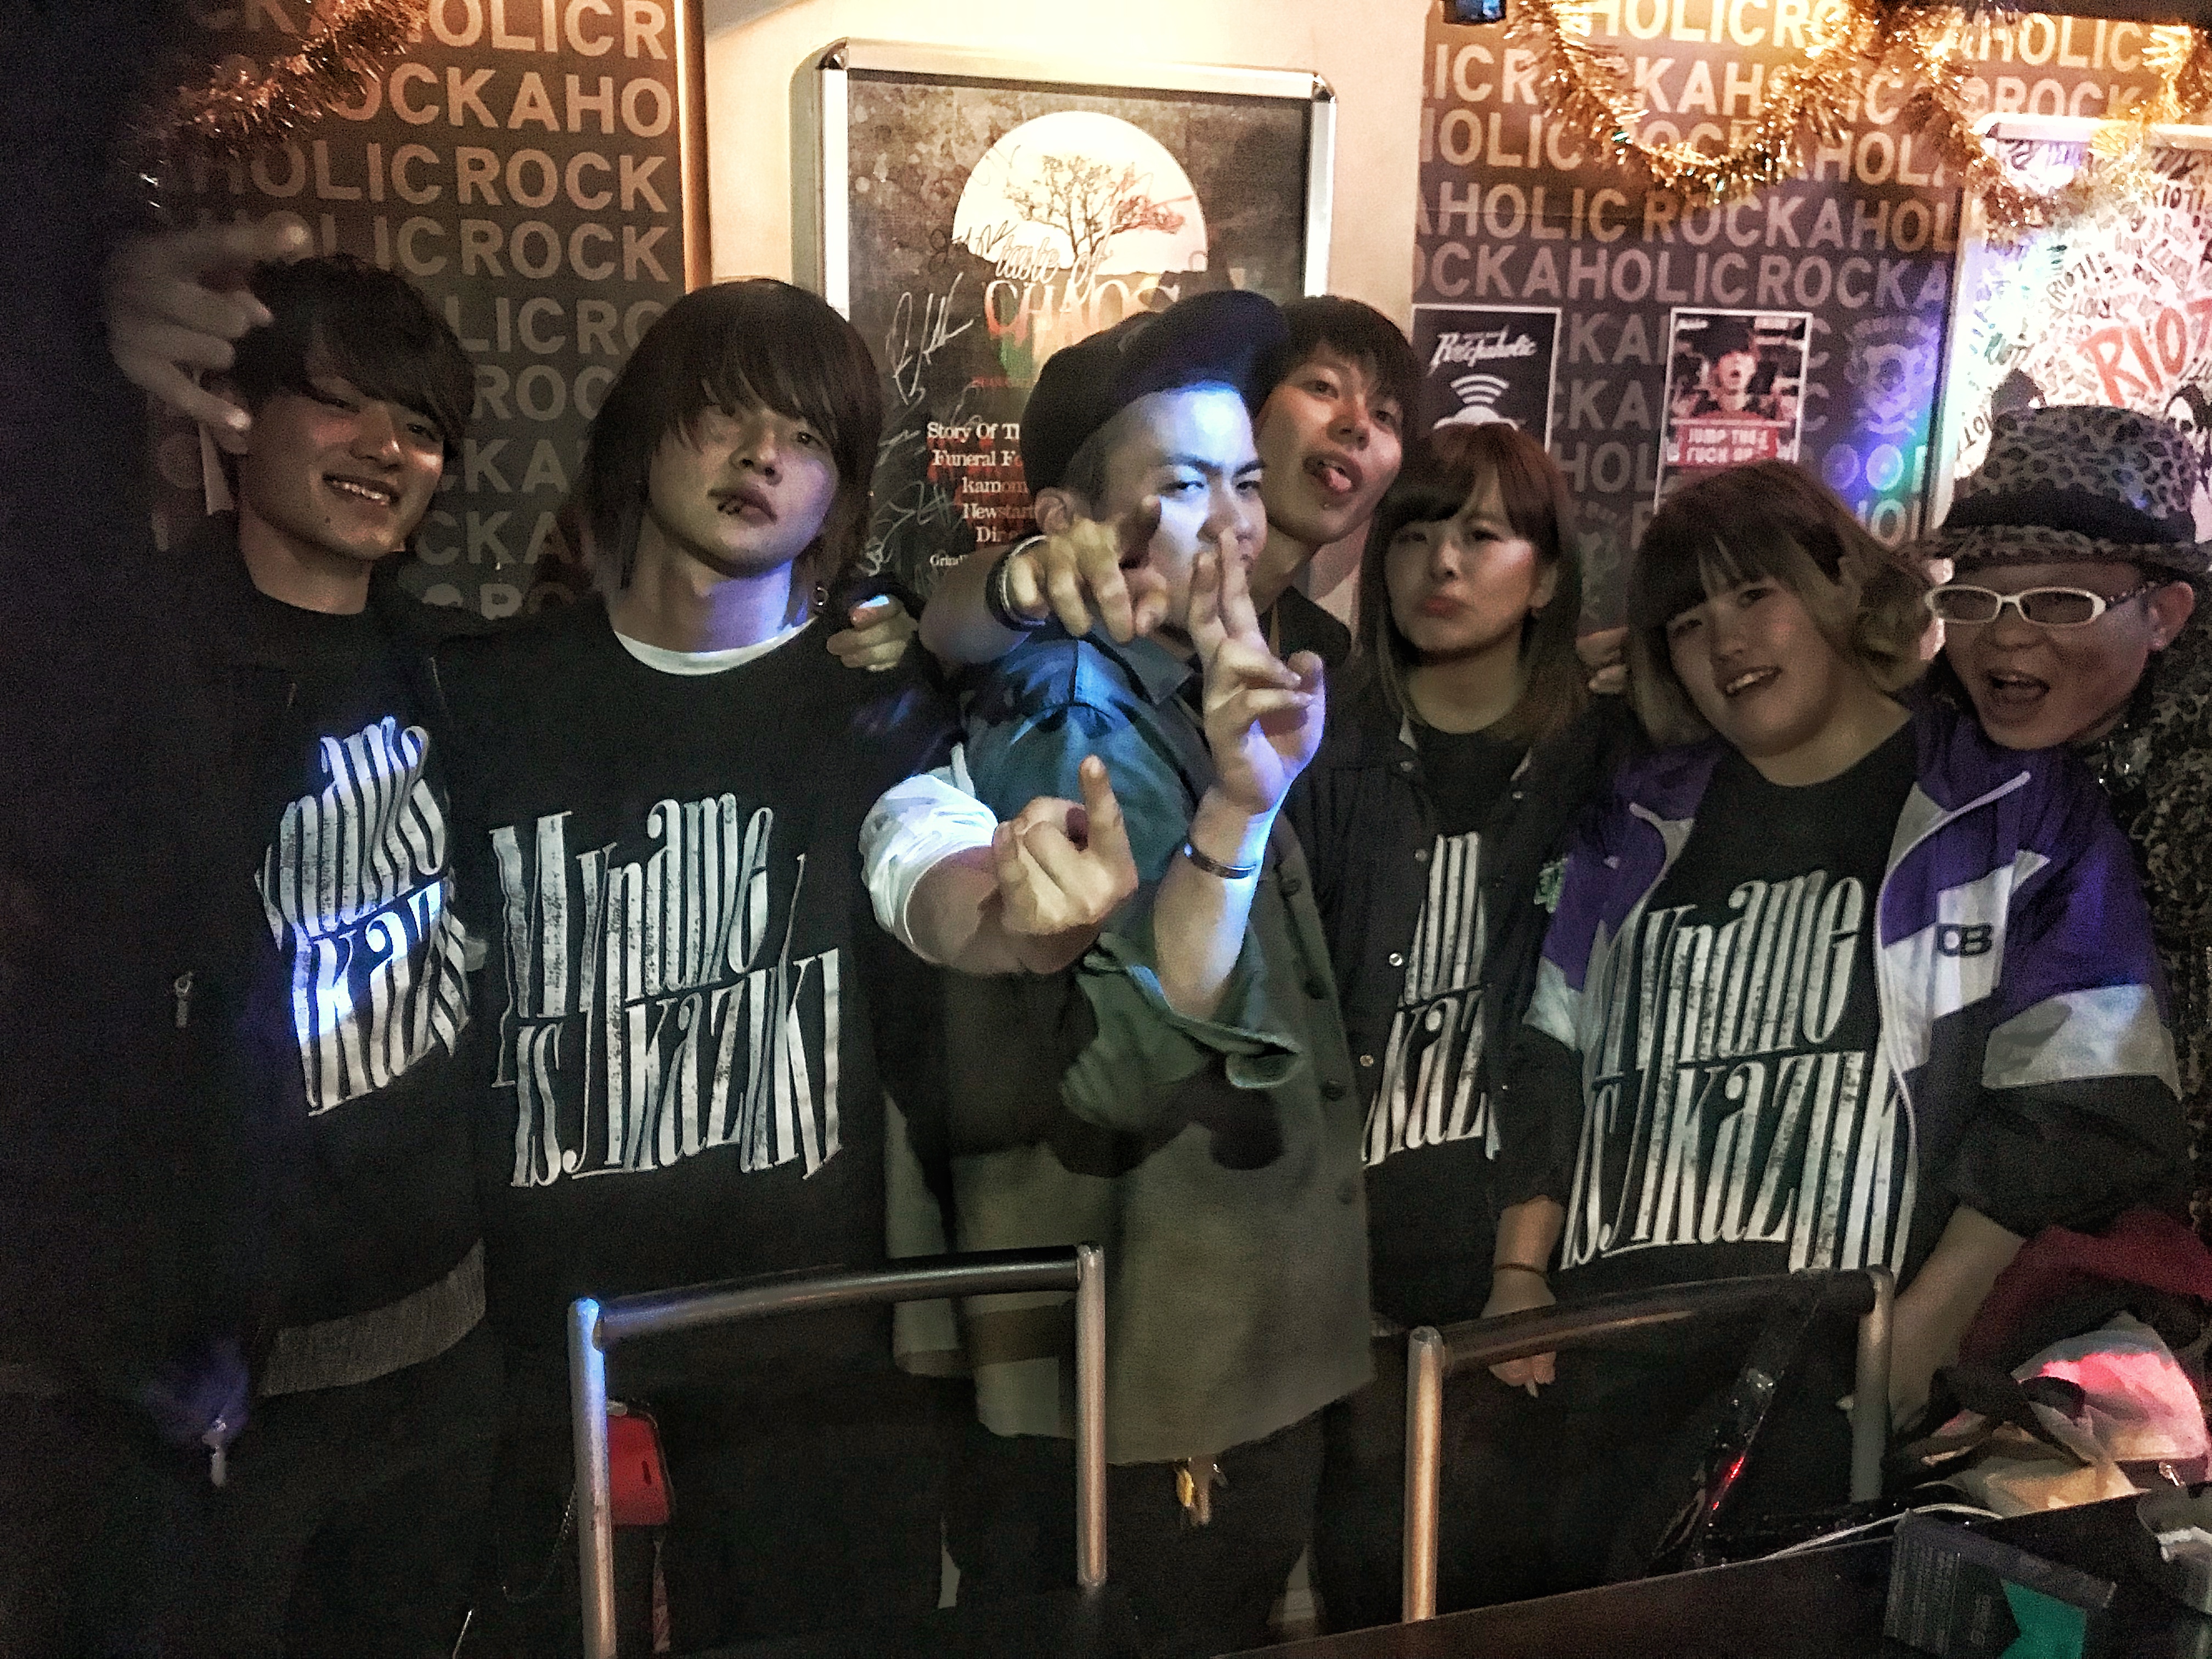 https://bar-rockaholic.jp/shibuya/blog/190D701A-BC98-4A00-AF36-2FC59F7ED84C.jpeg